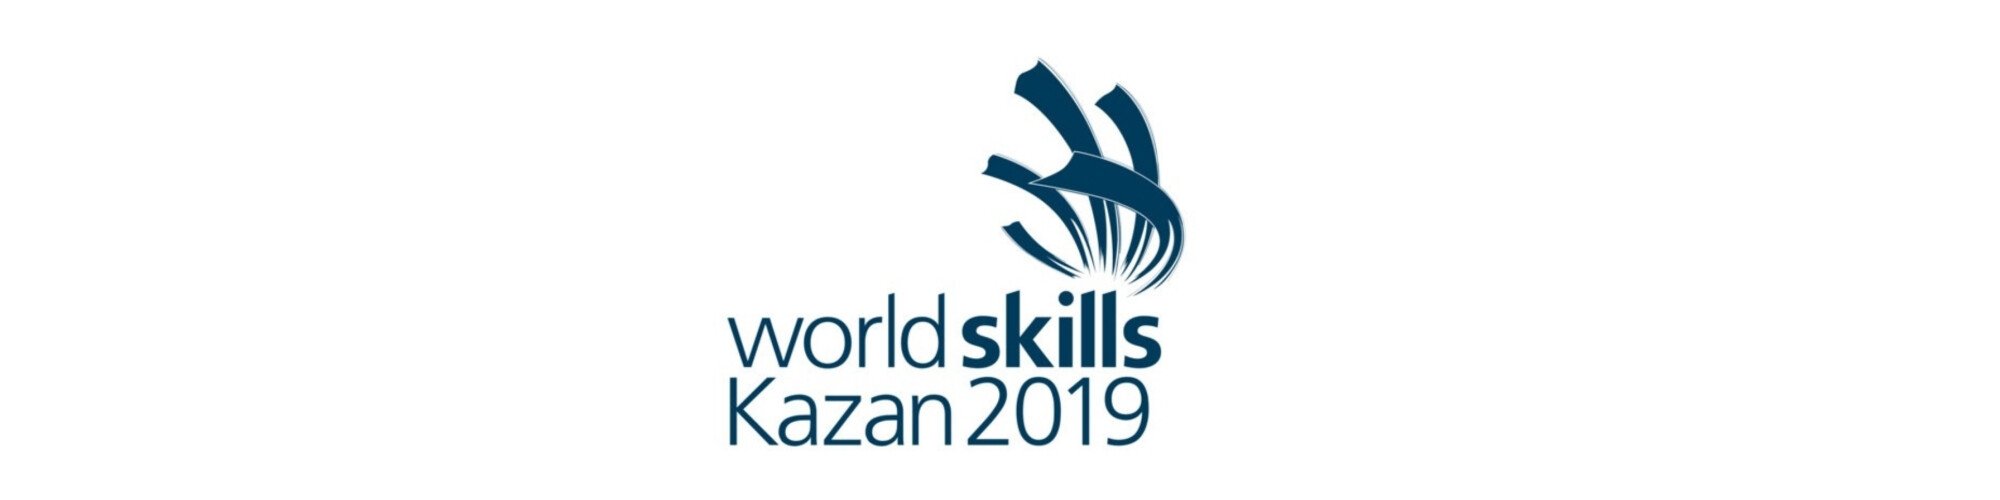 WorldSkills Kazan 2019 Skills Declaration was